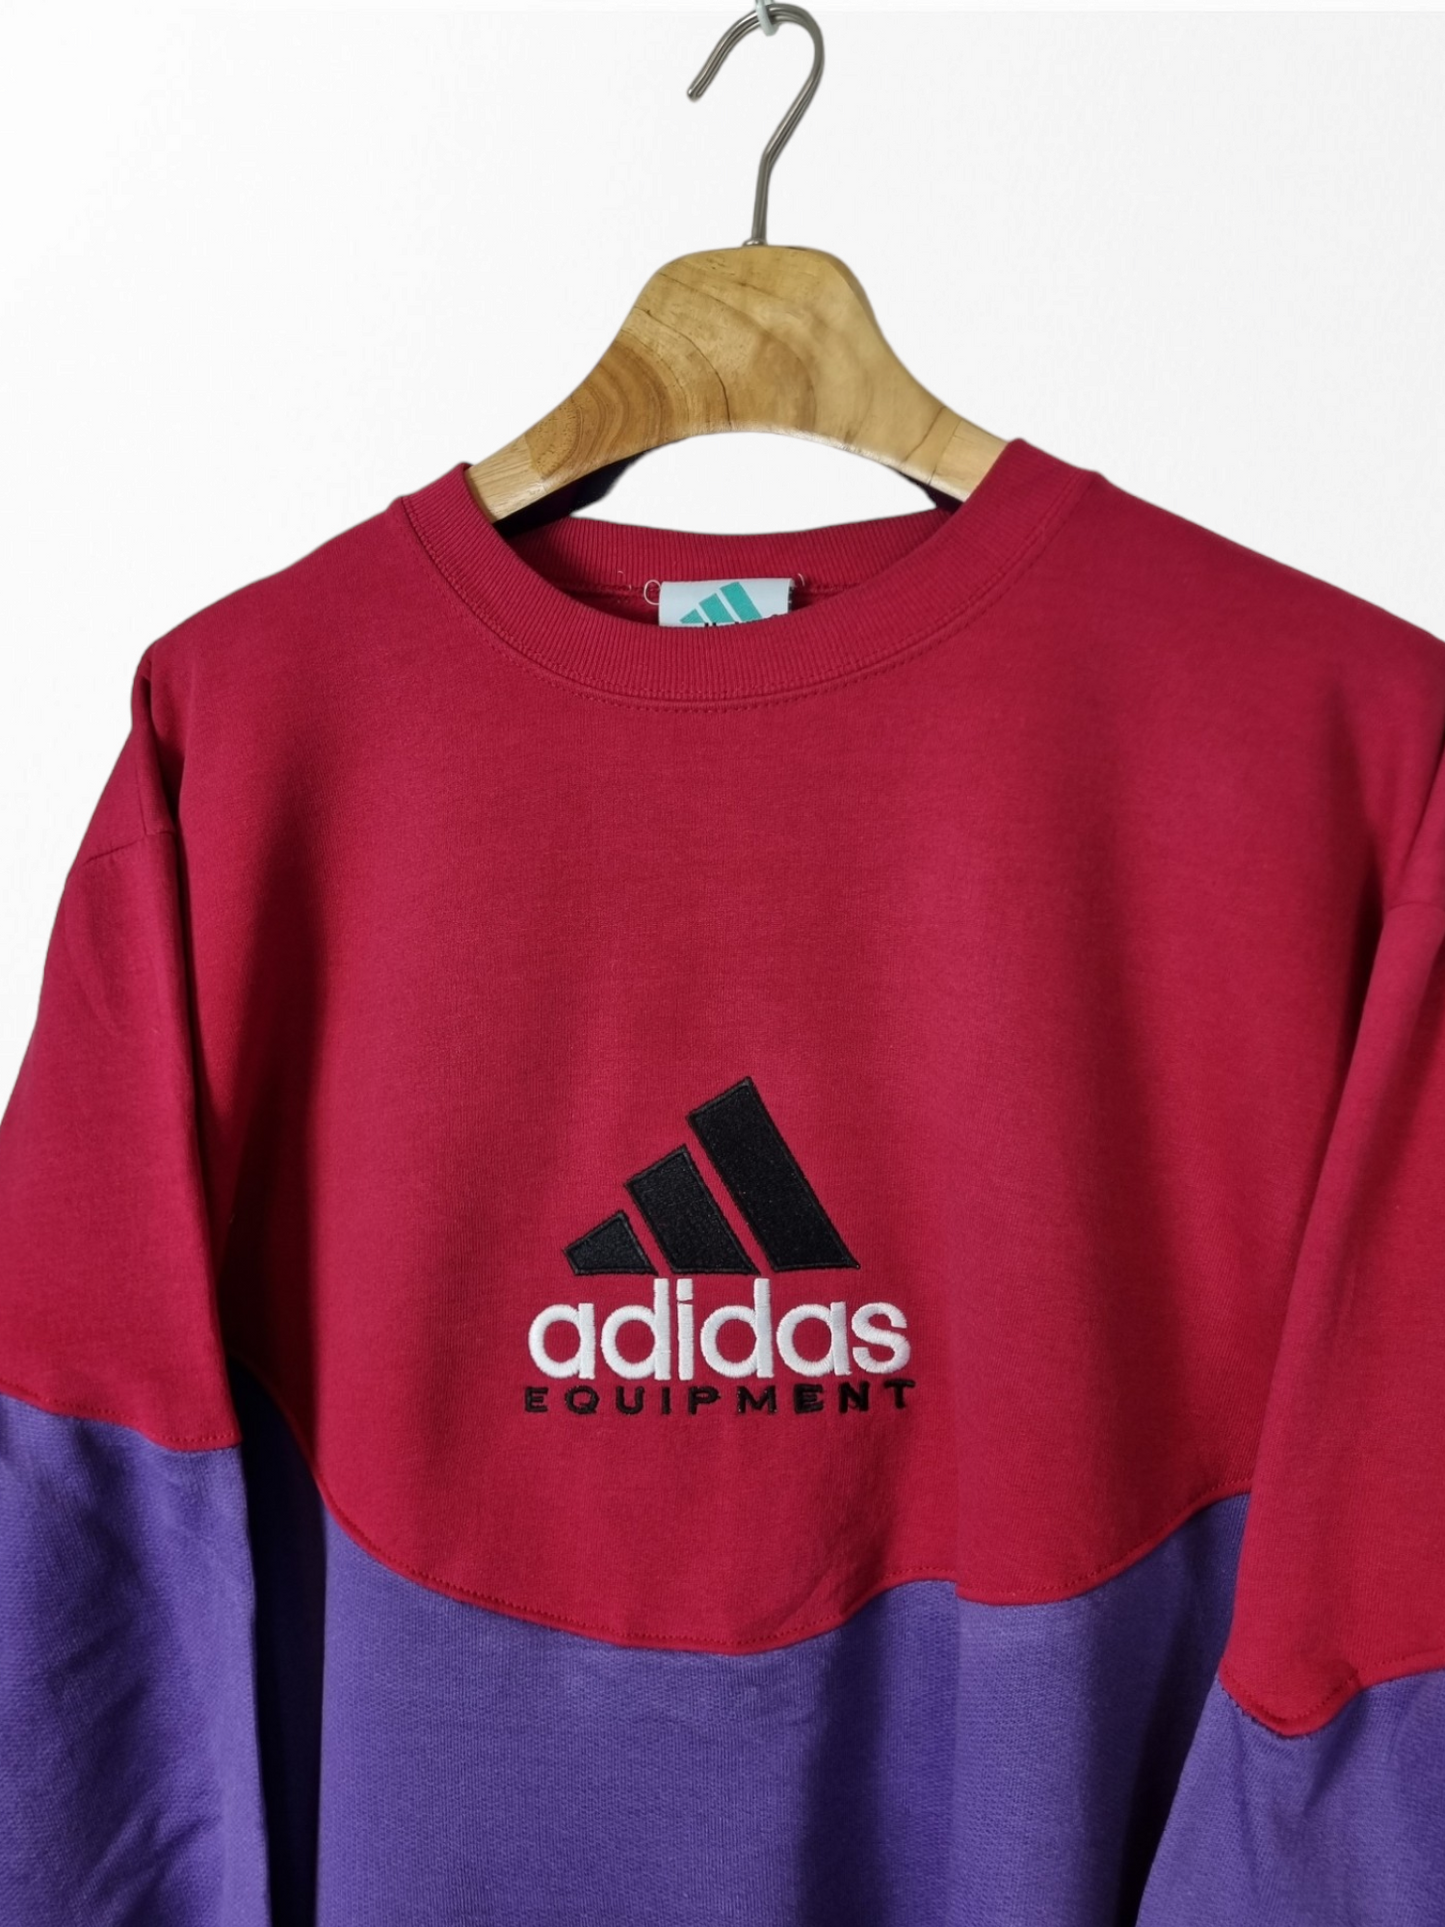 Adidas 90s equipement sweater maat M/L